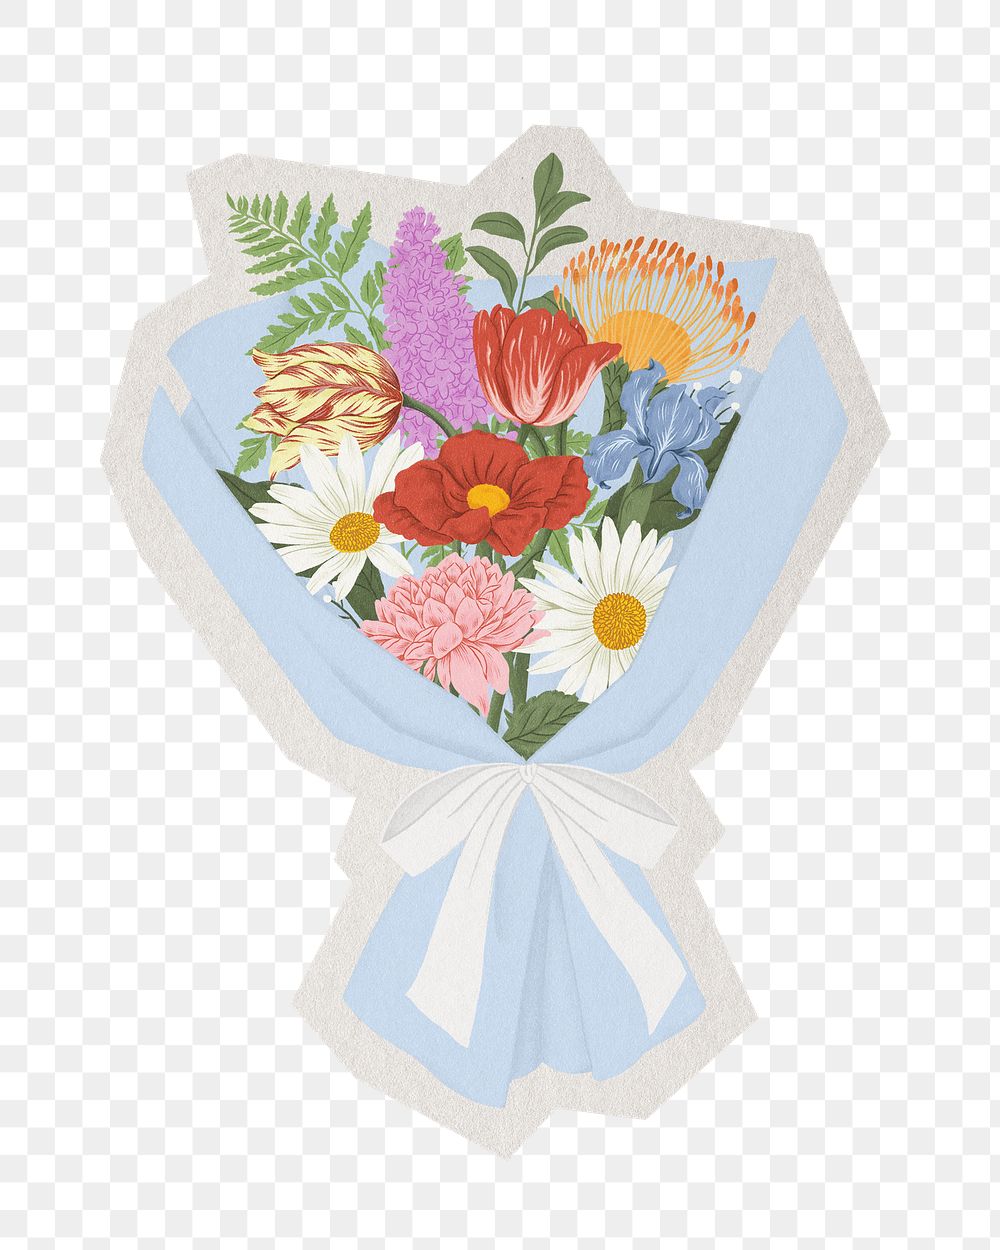 Flower bouquet png sticker, paper cut on transparent background